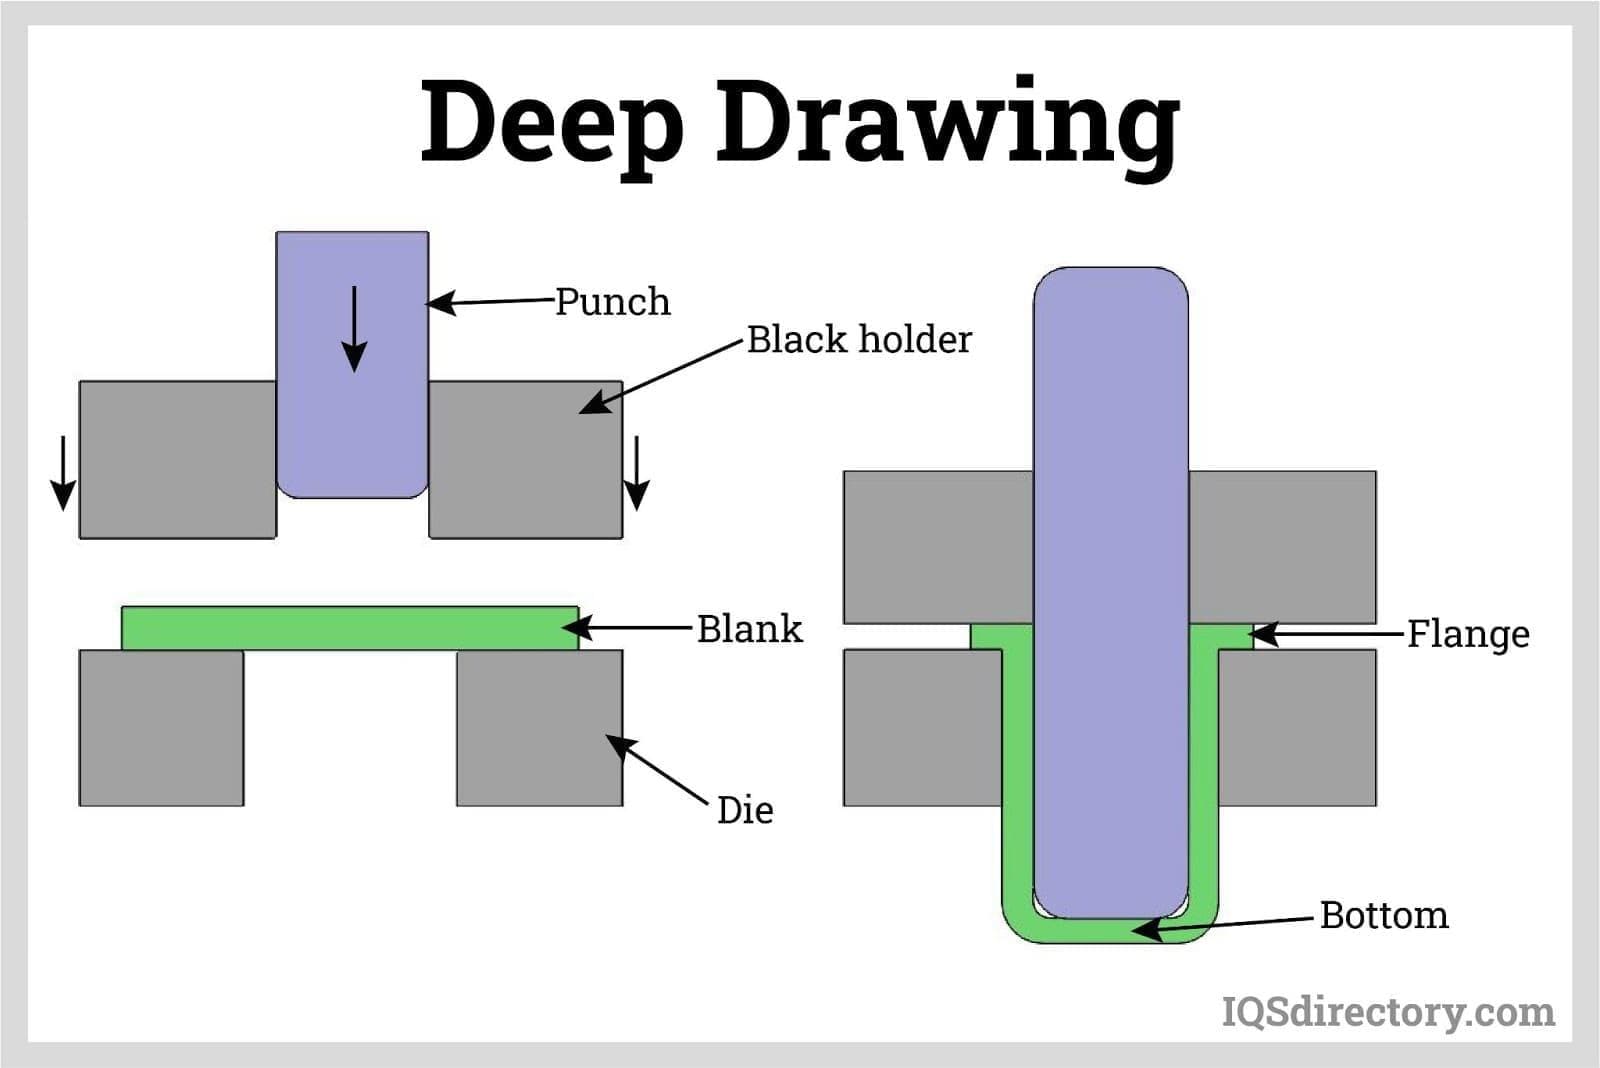 Deep Drawing